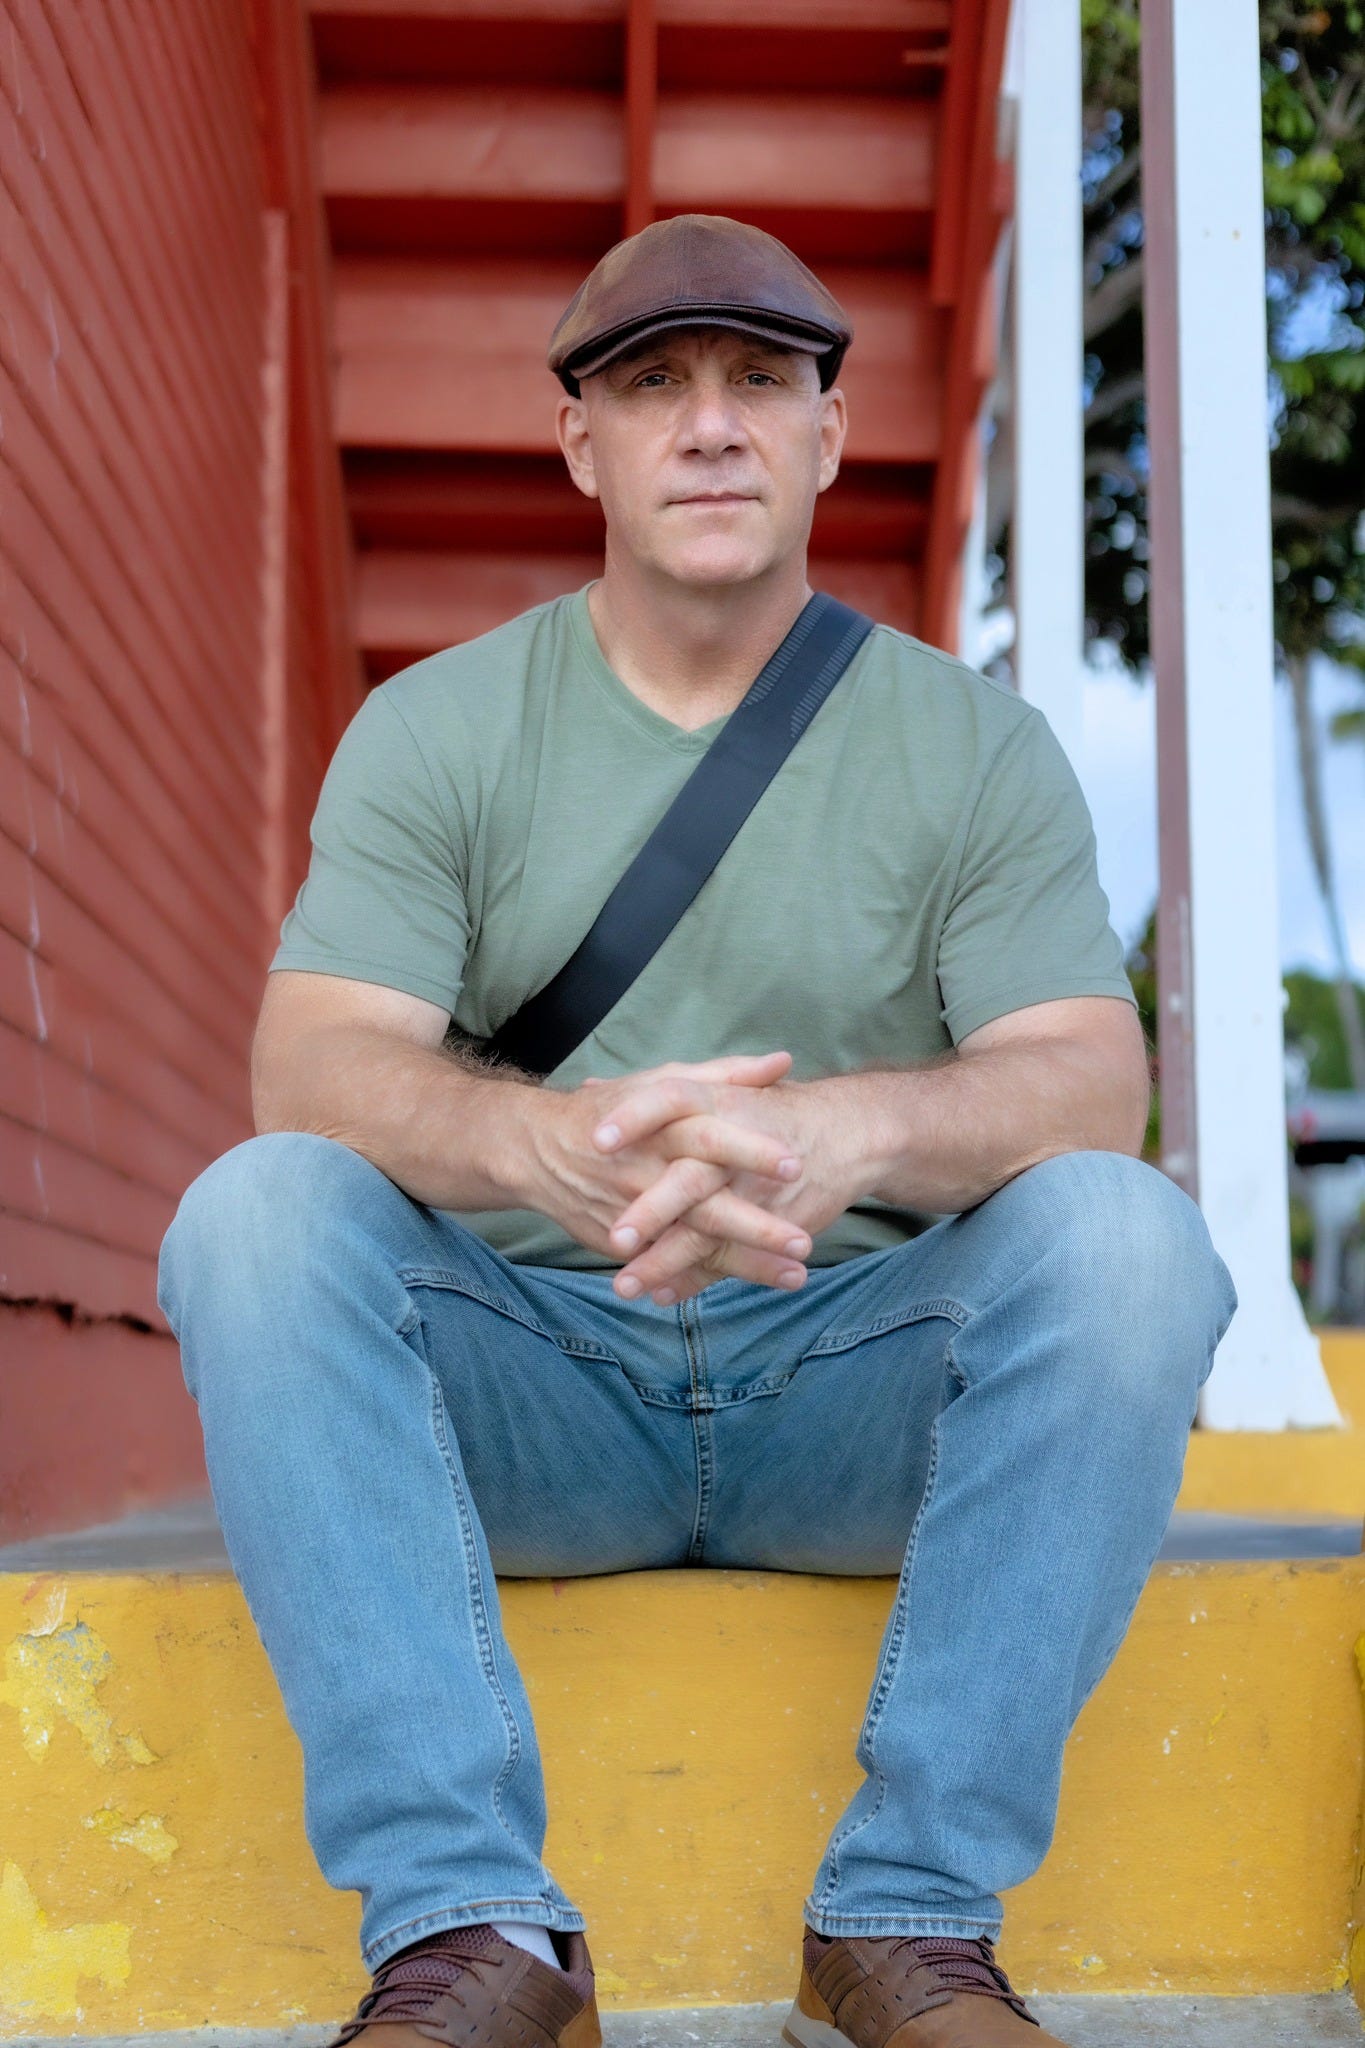 Photograph of Matthew Moran in Marina del Rey taken by Debbie Levy